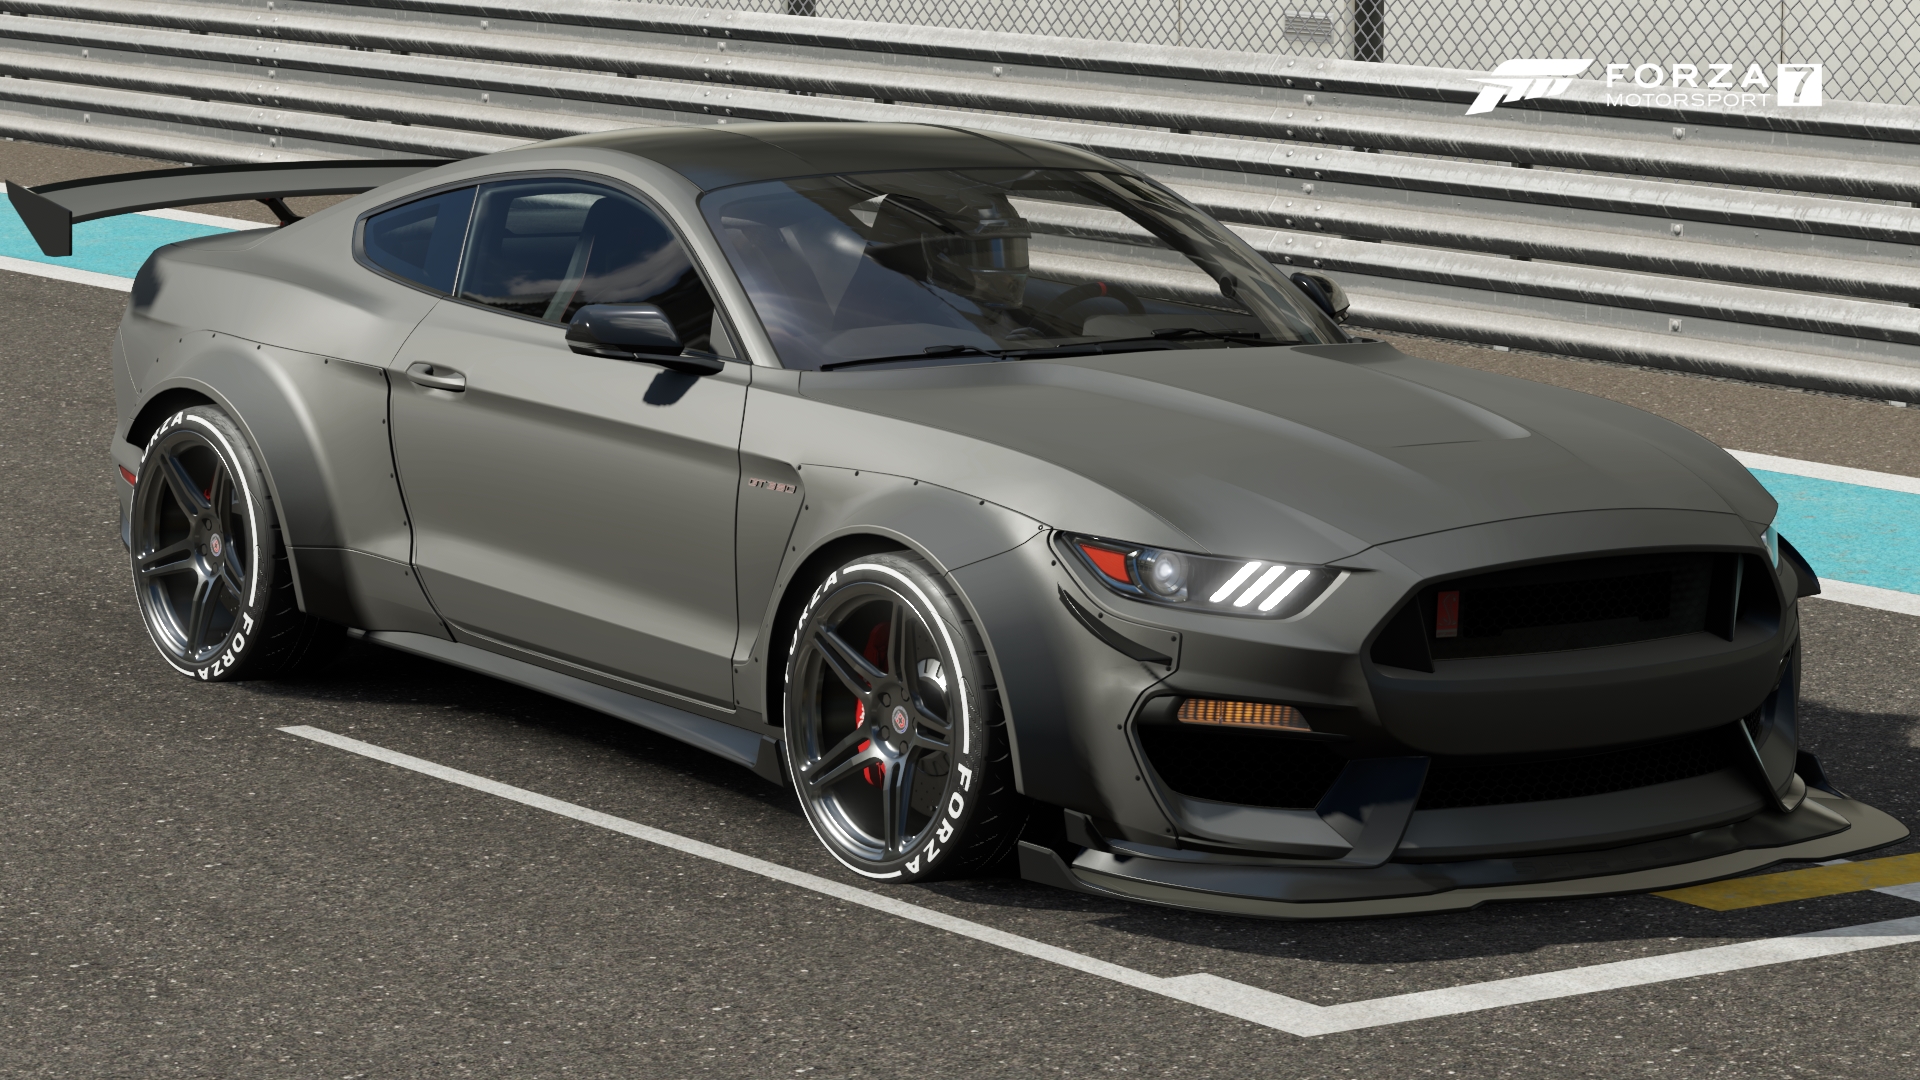 Image - FM7 Ford Mustang 16 FE.jpg | Forza Motorsport Wiki | FANDOM ...